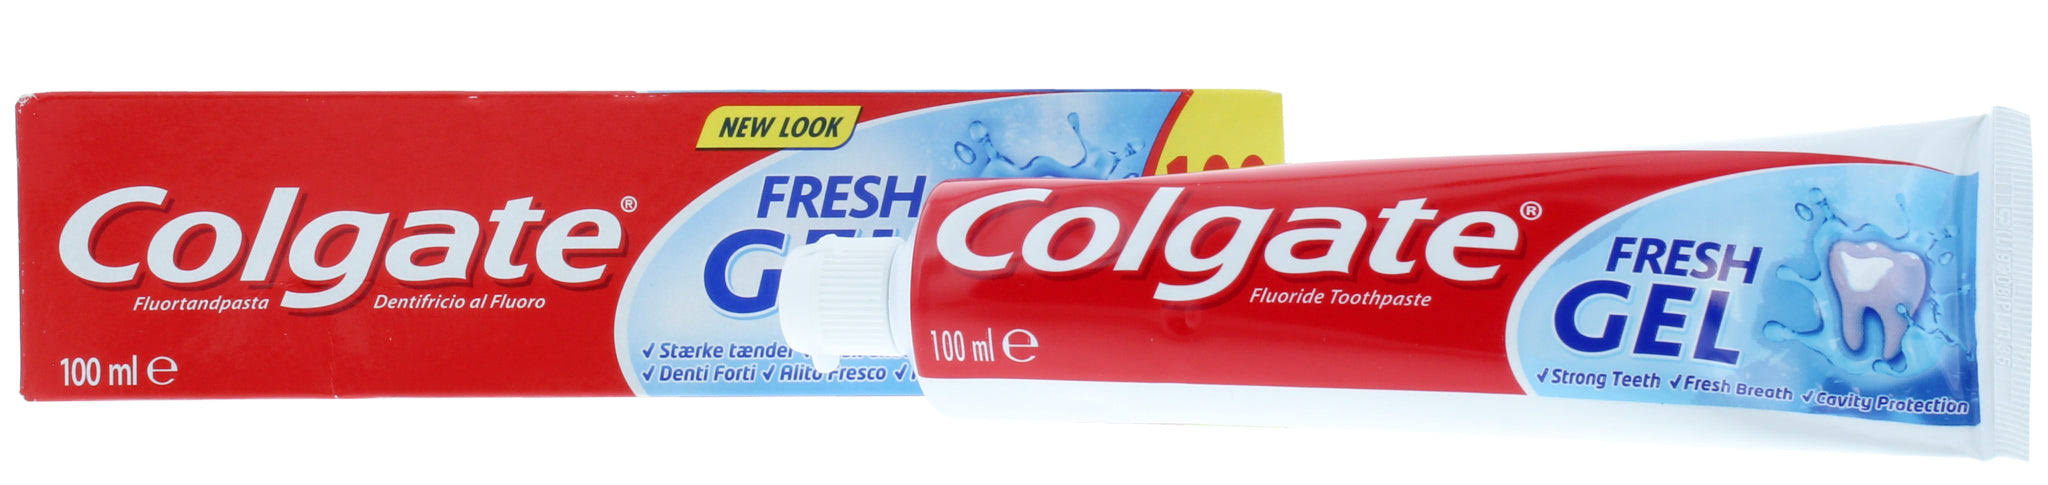 Colgate Blue Minty Gel Toothpaste - 100ml